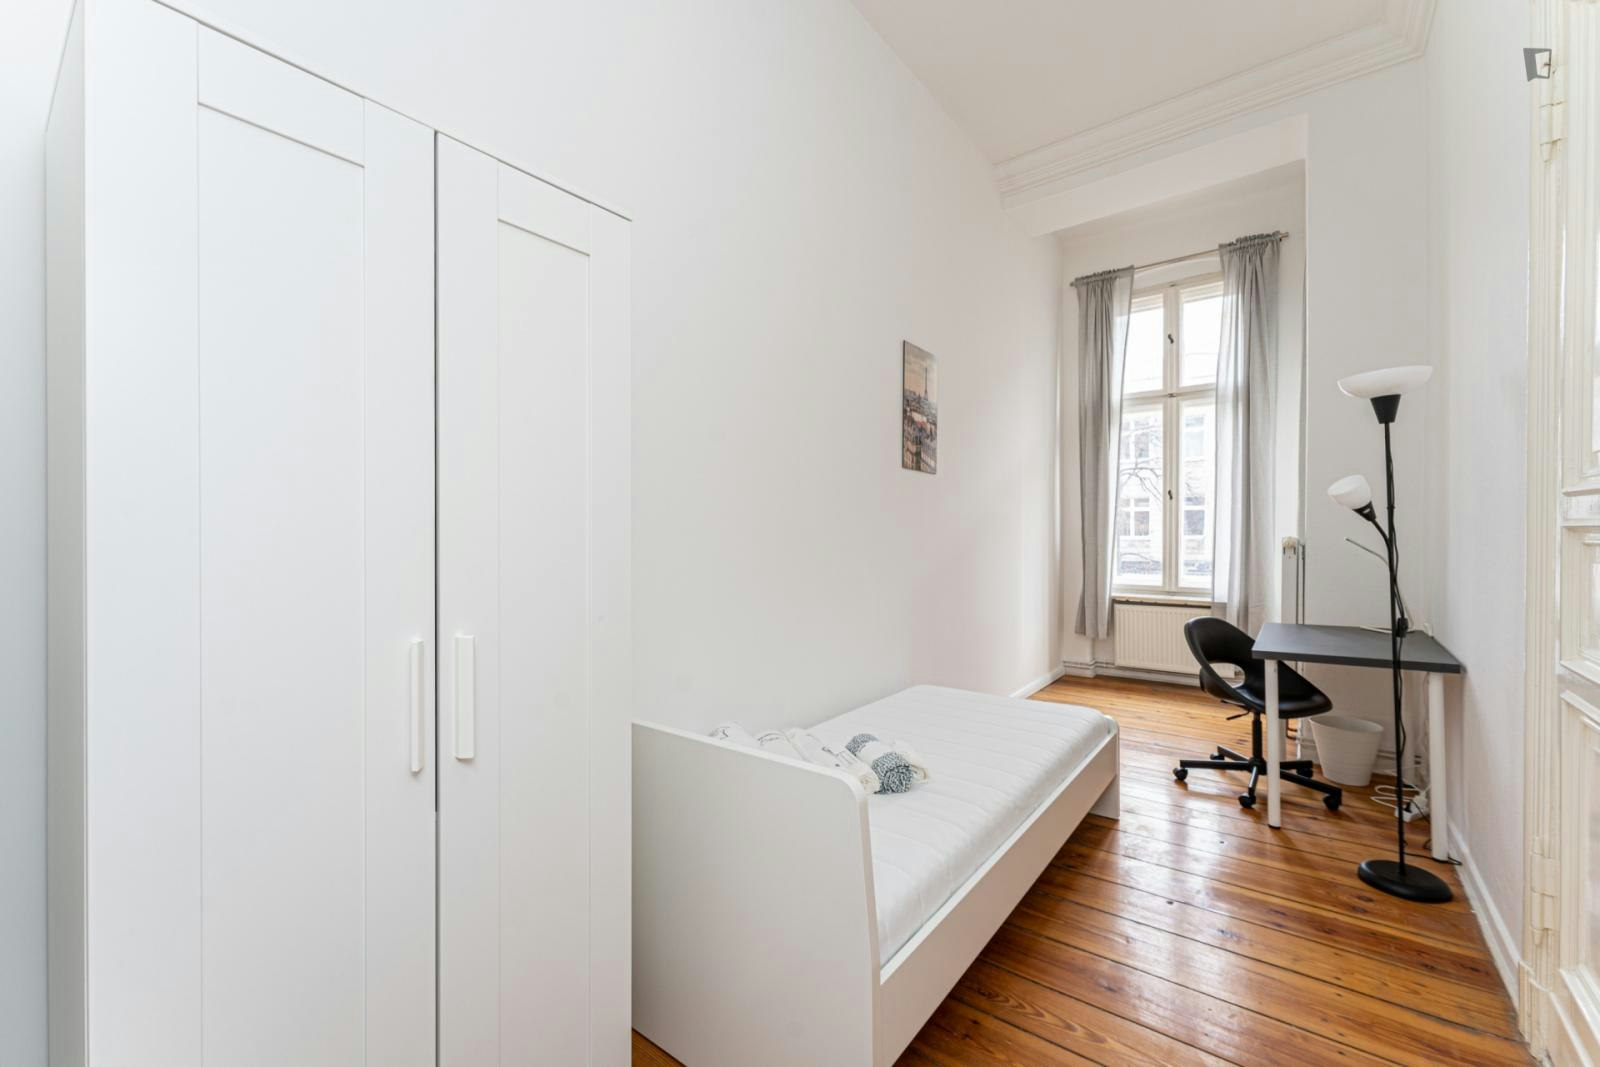 Neat single bedroom with balcony in Charlottenburg